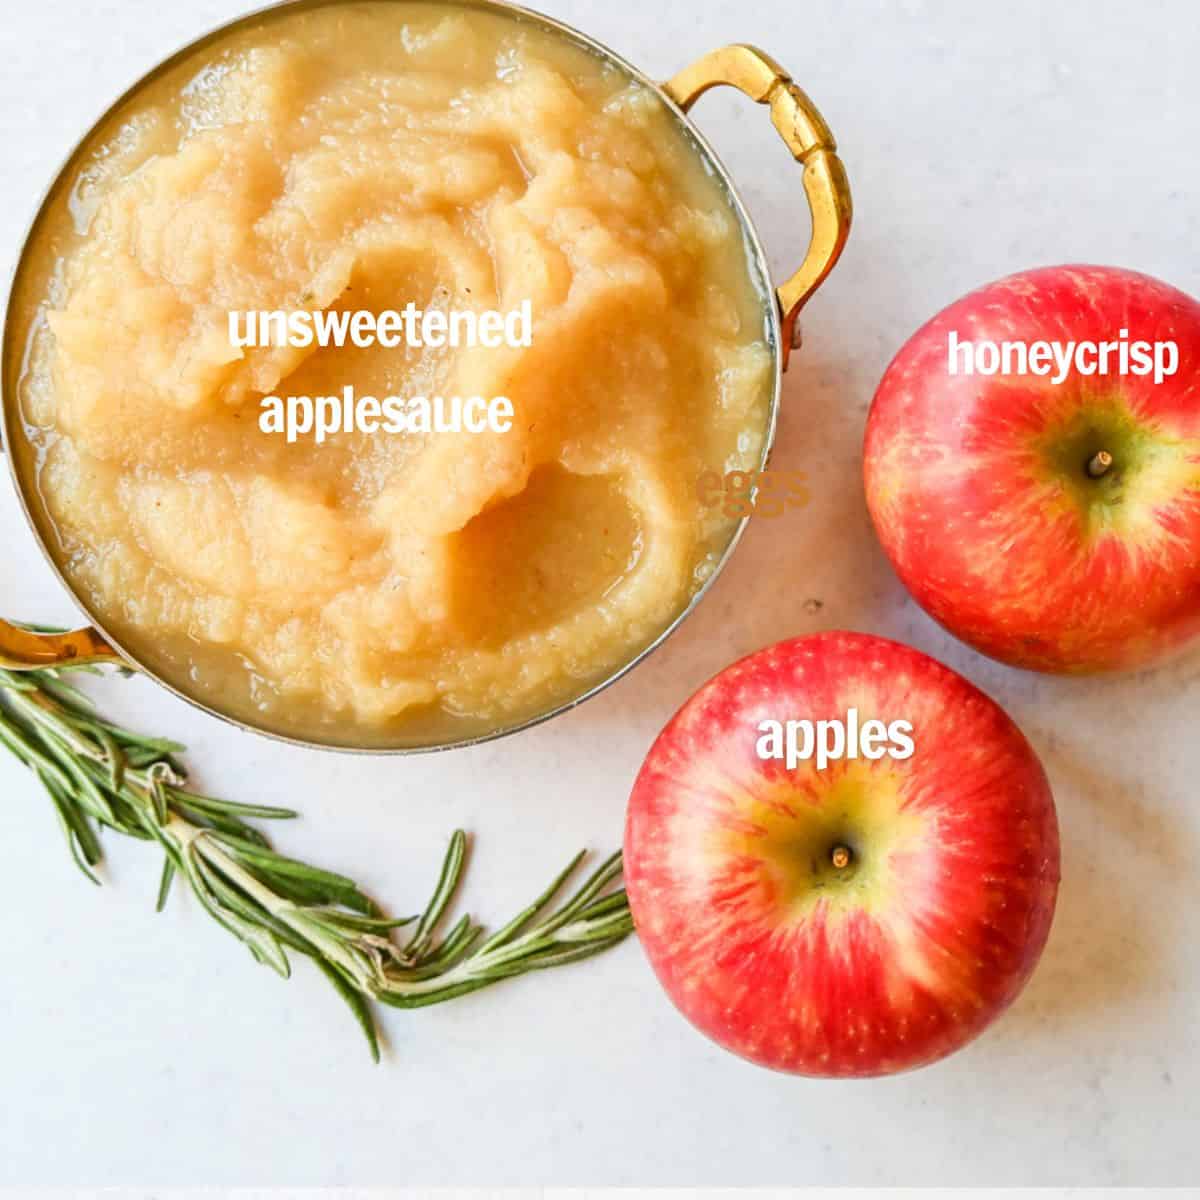 Apples and Applesauce in apple cake recipe.